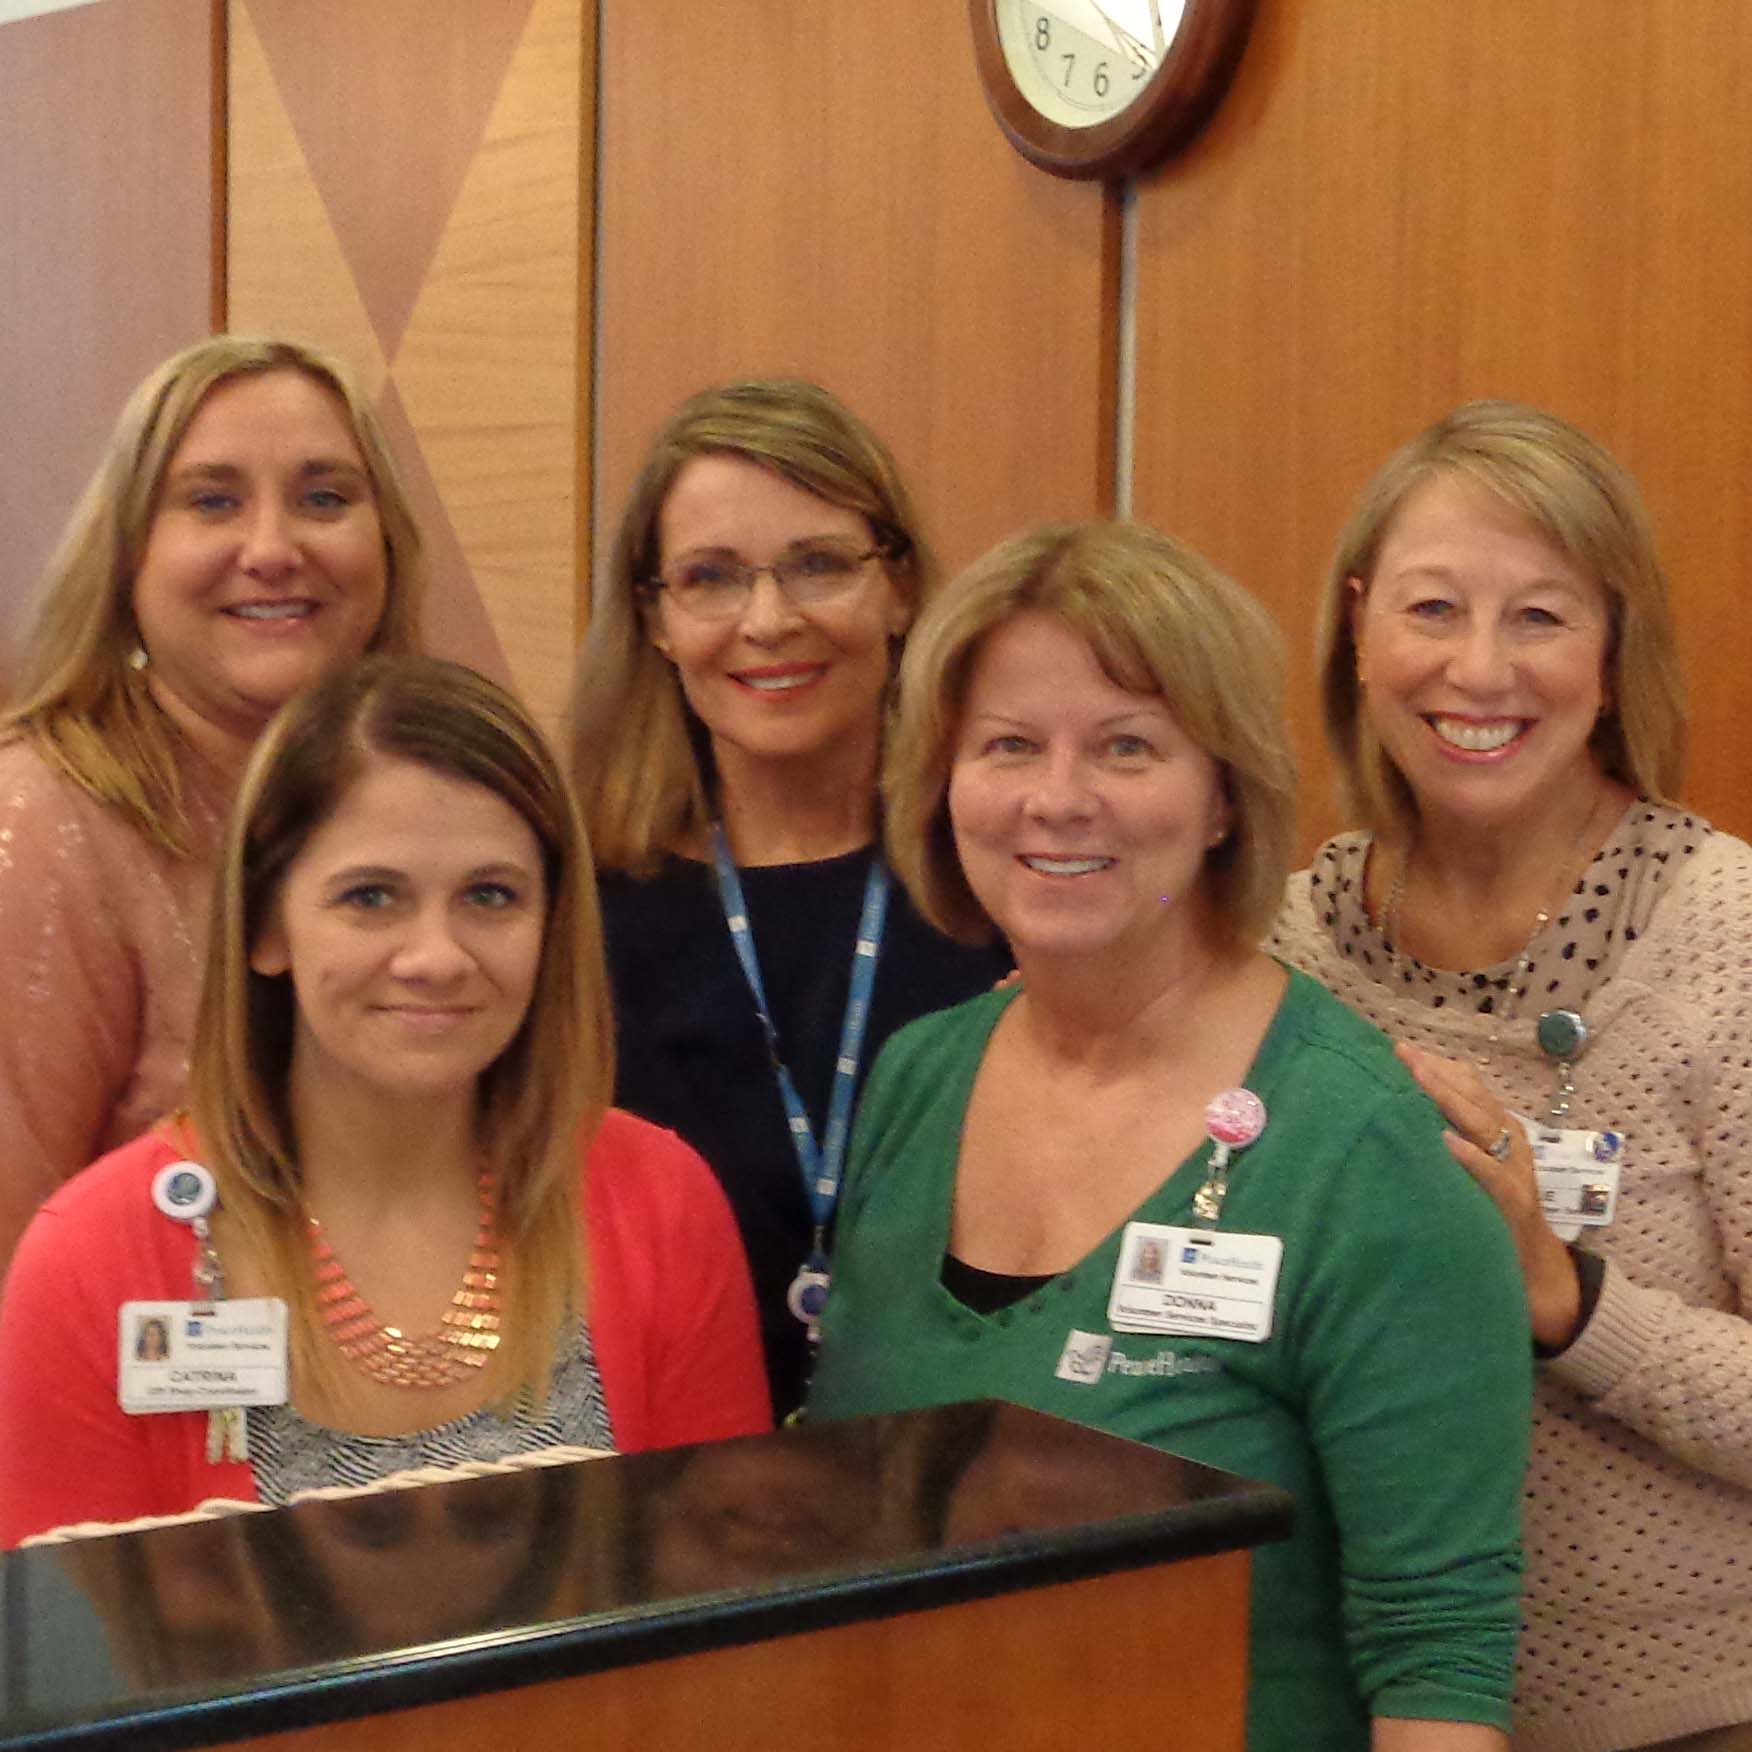 The Longview Concierge Desk Staff team pose for a group photo